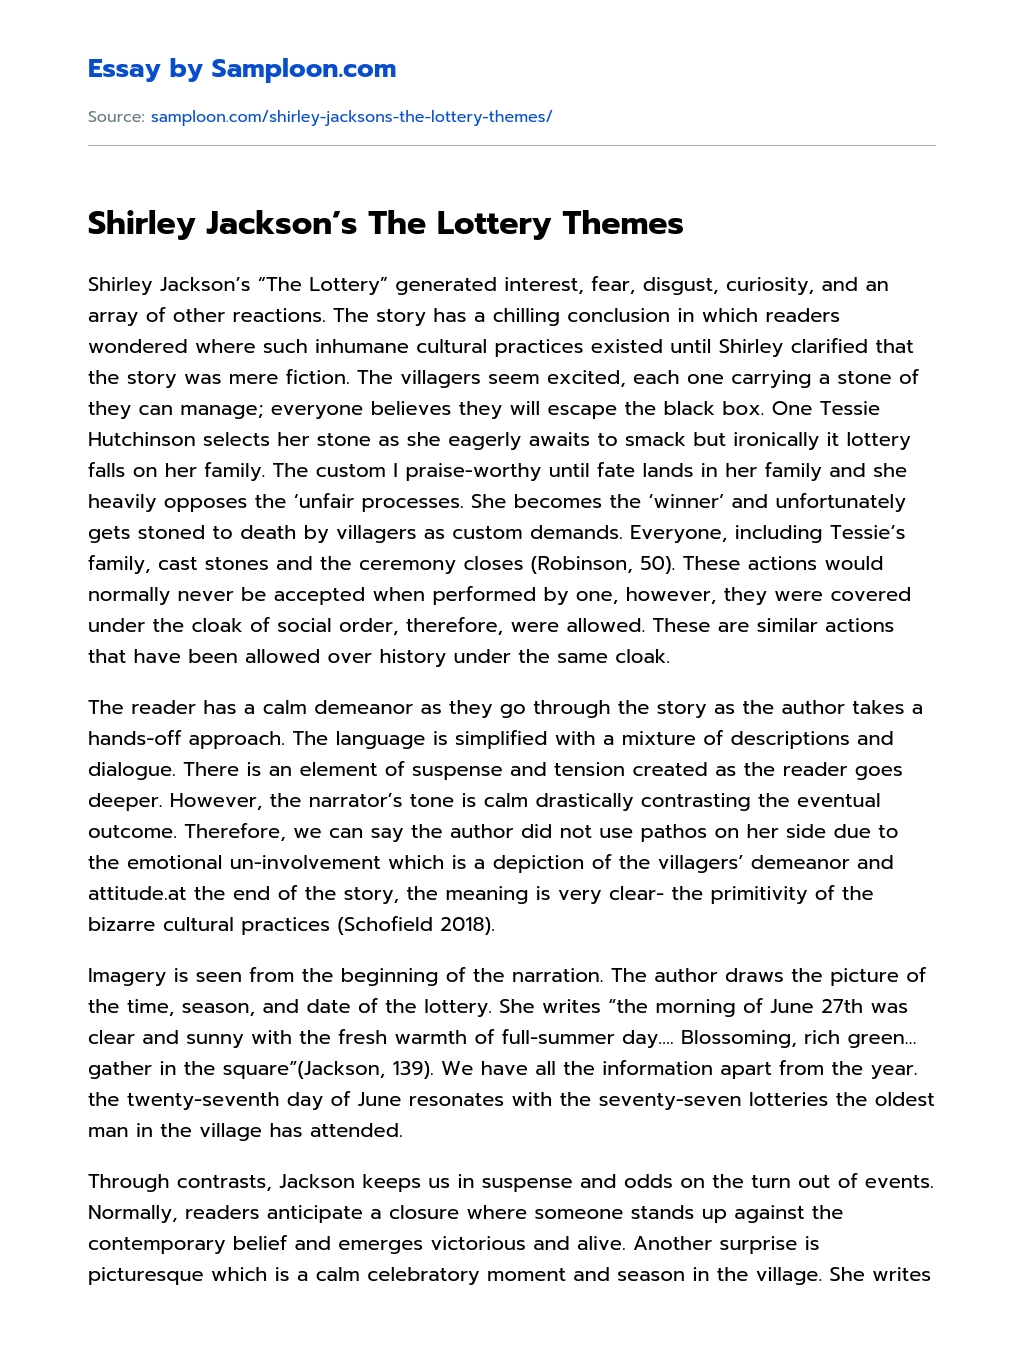 Shirley Jackson’s The Lottery Themes Literary Analysis essay